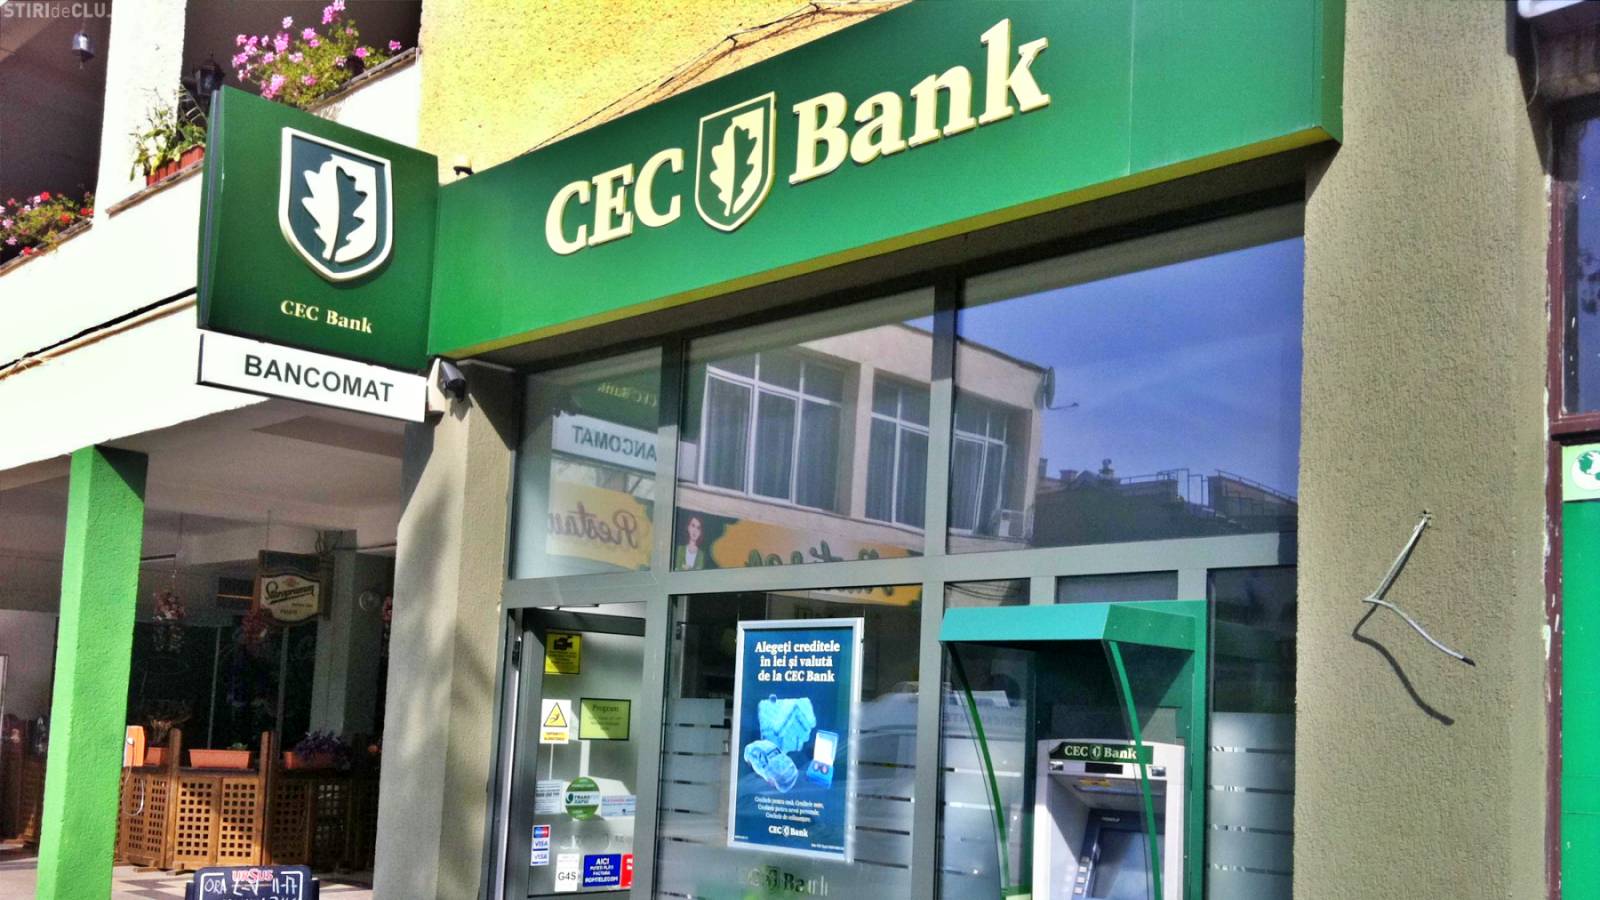 CEC Bank hastighet